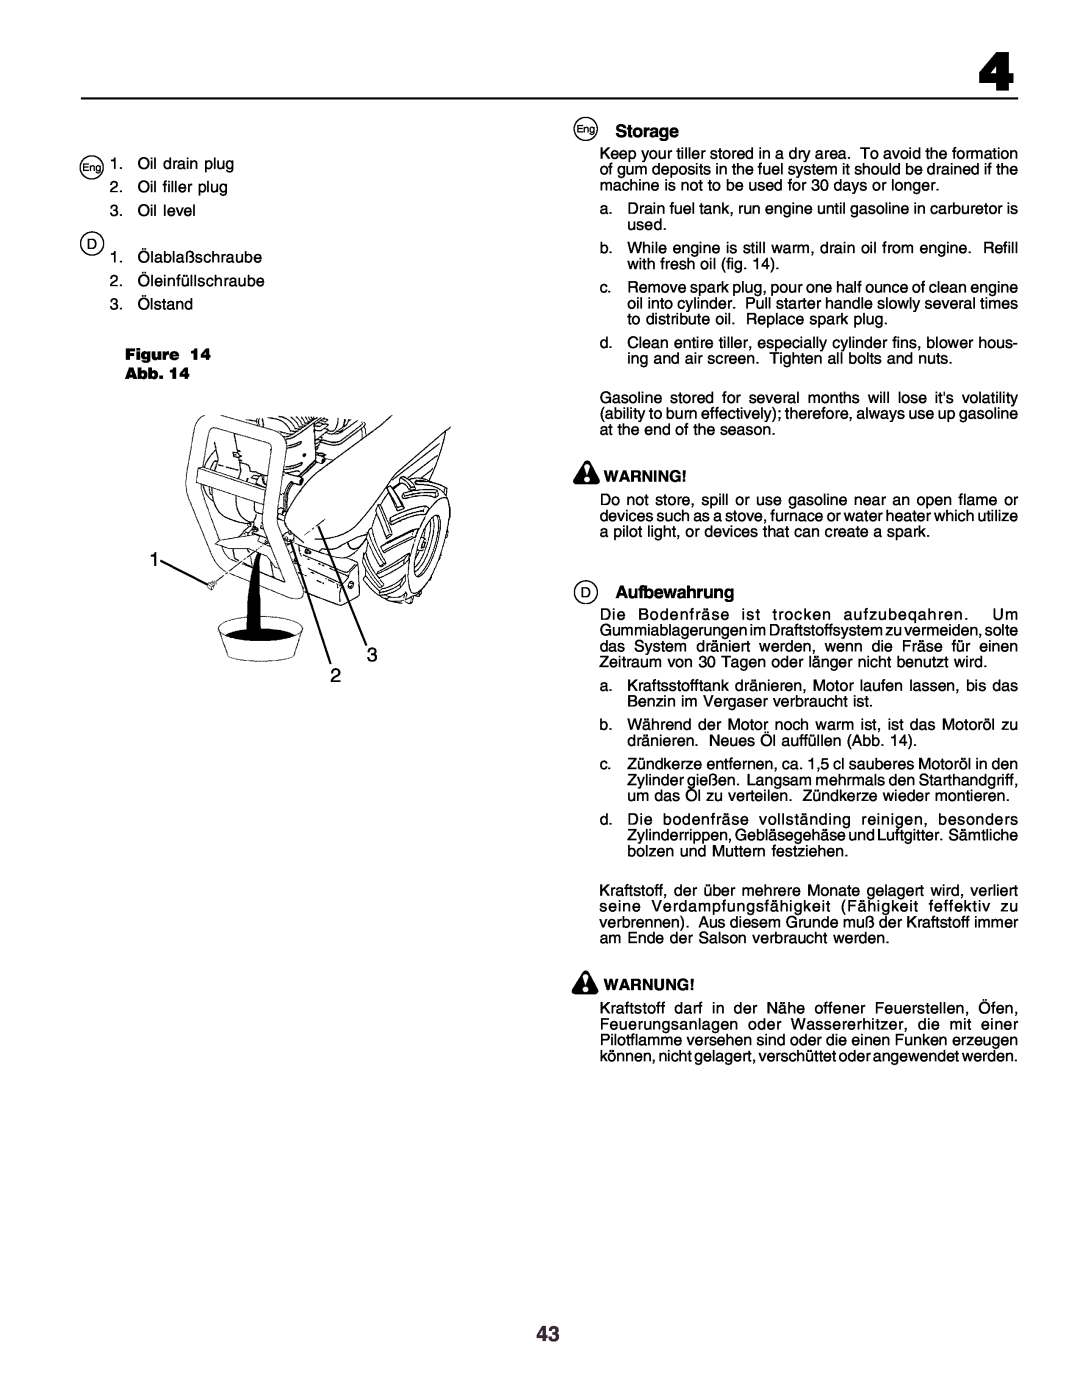 Husqvarna crt51 instruction manual 1 3 2, Eng Storage, DAufbewahrung, Figure Abb, Warnung 